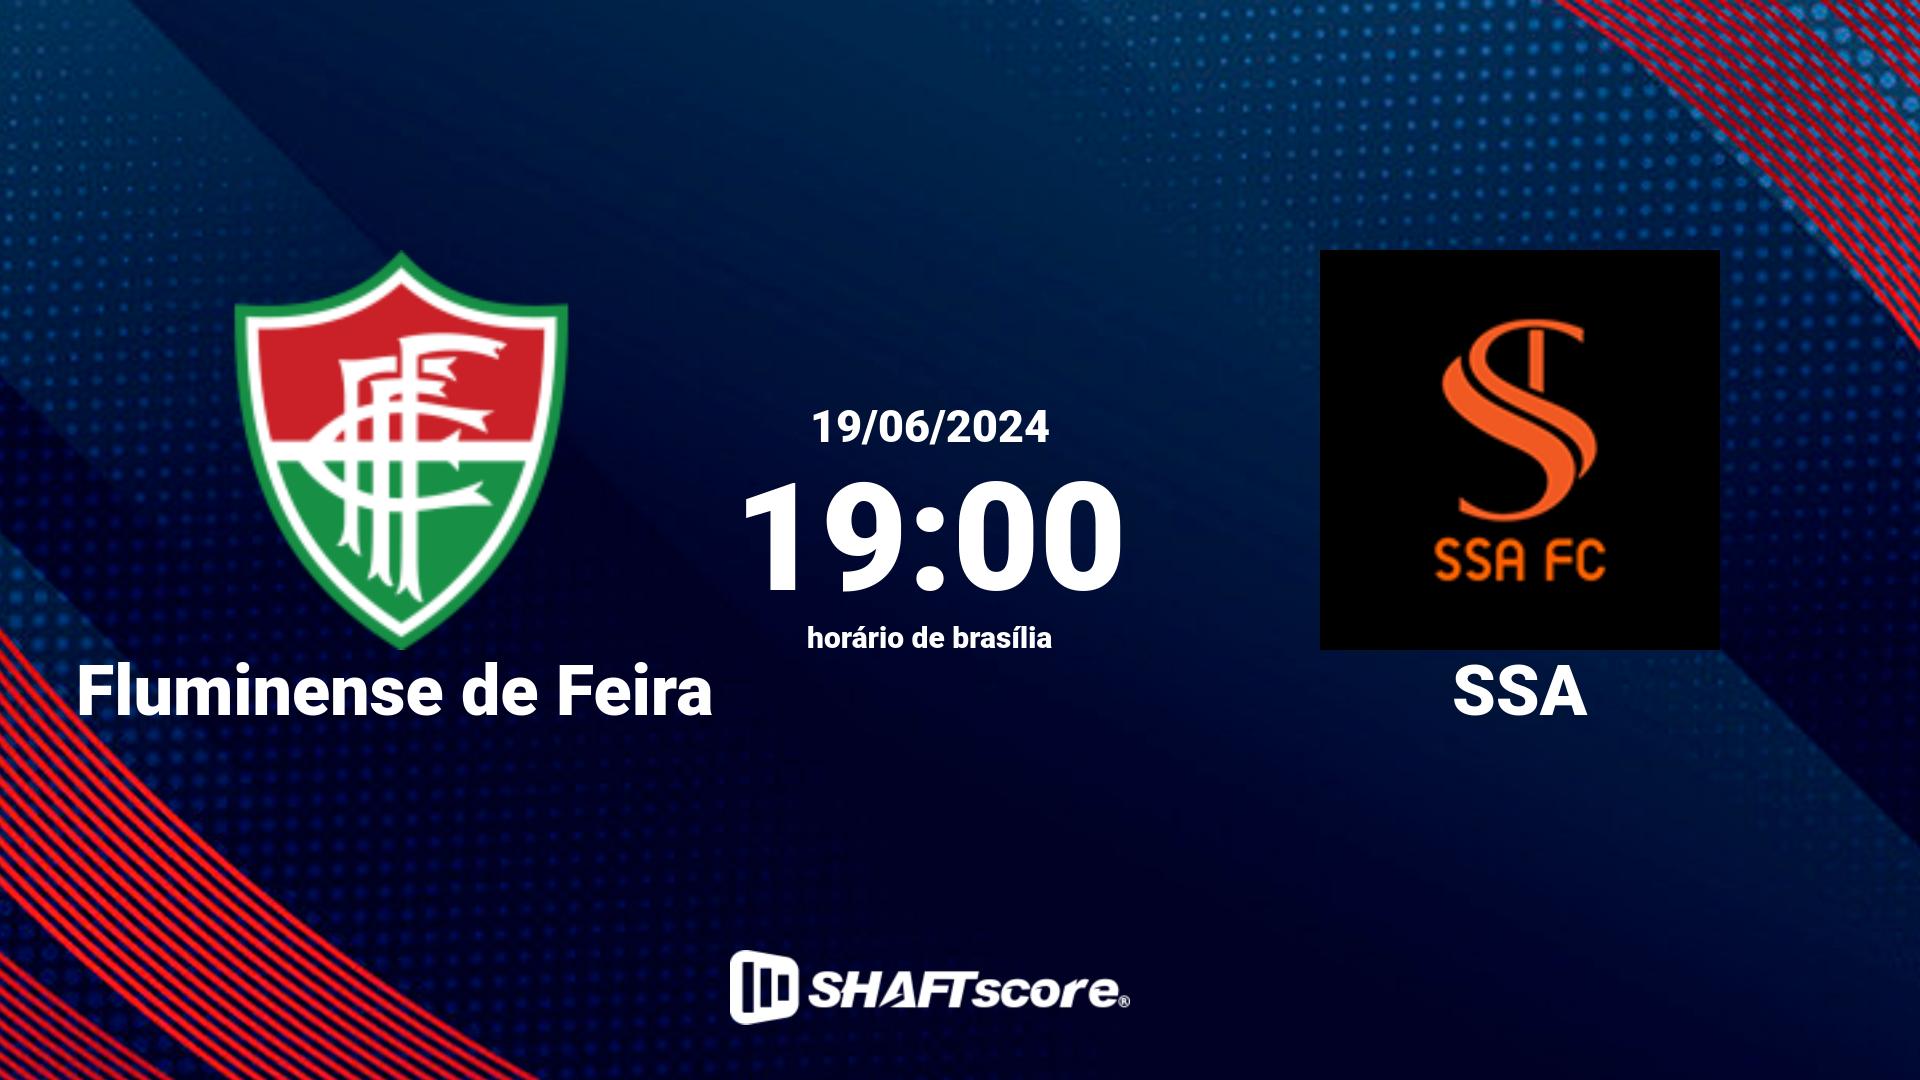 Estatísticas do jogo Fluminense de Feira vs SSA 19.06 19:00